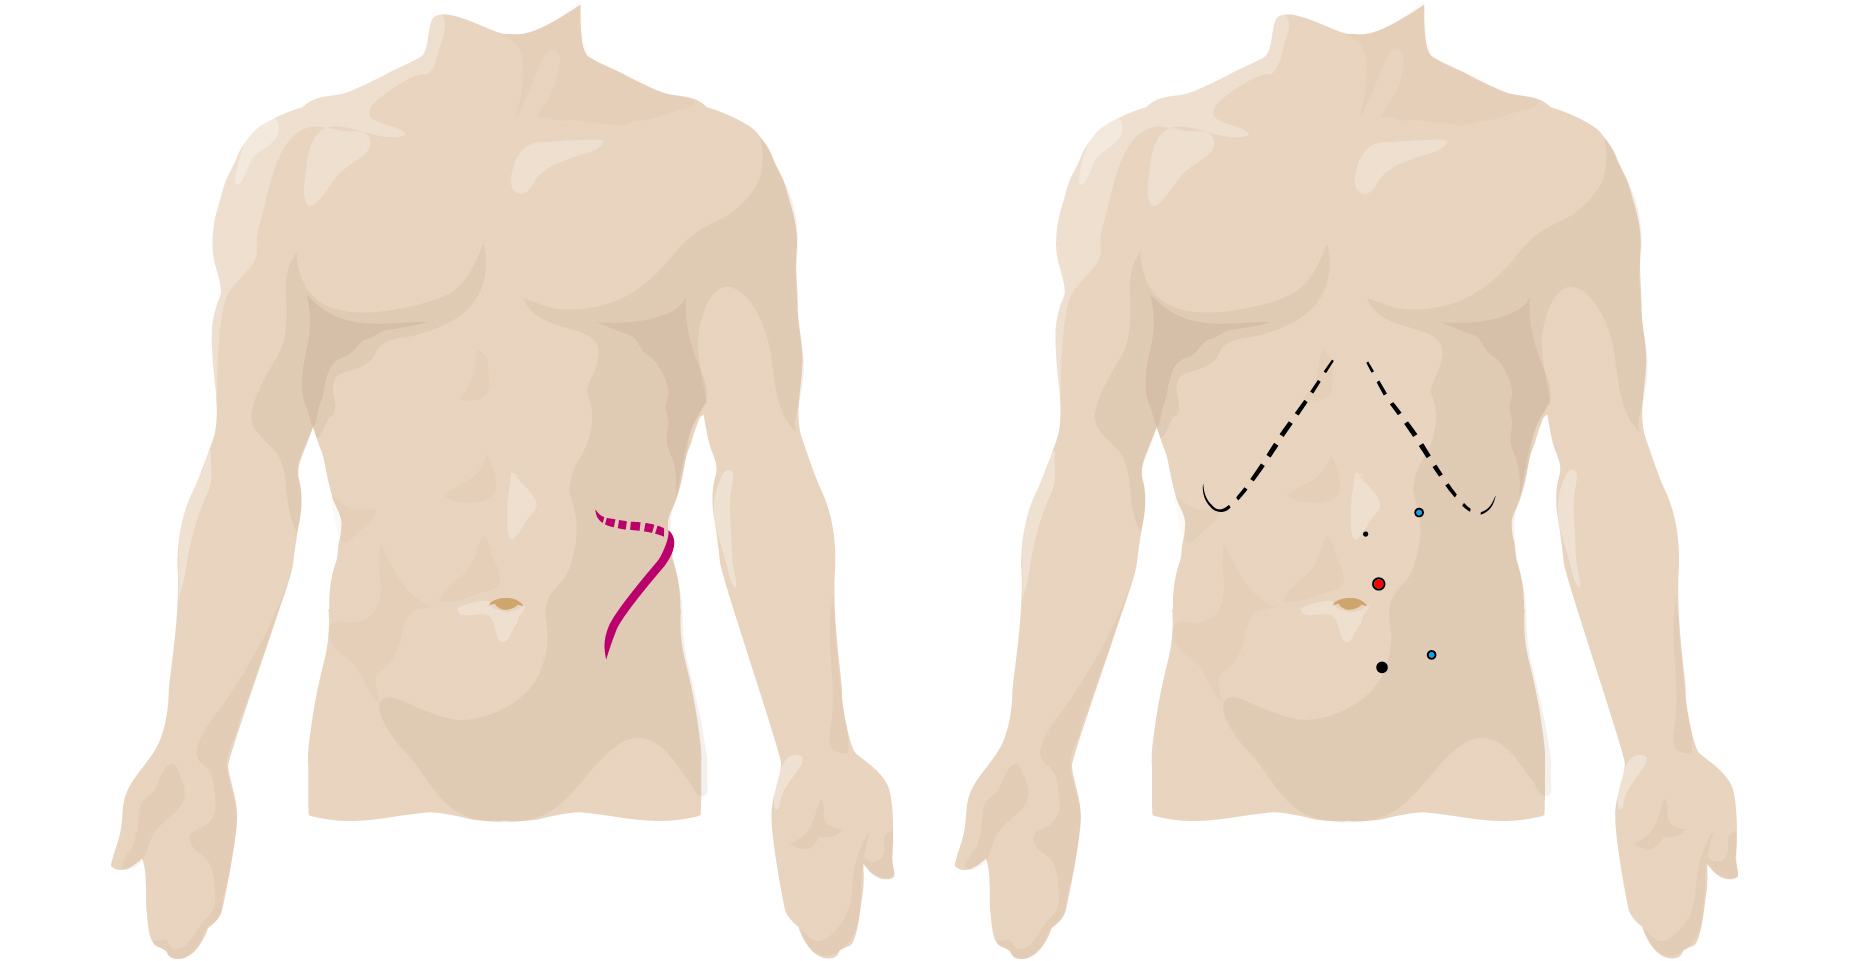 Nephro-uretectomy: open surgical incision vs laparoscopic incision